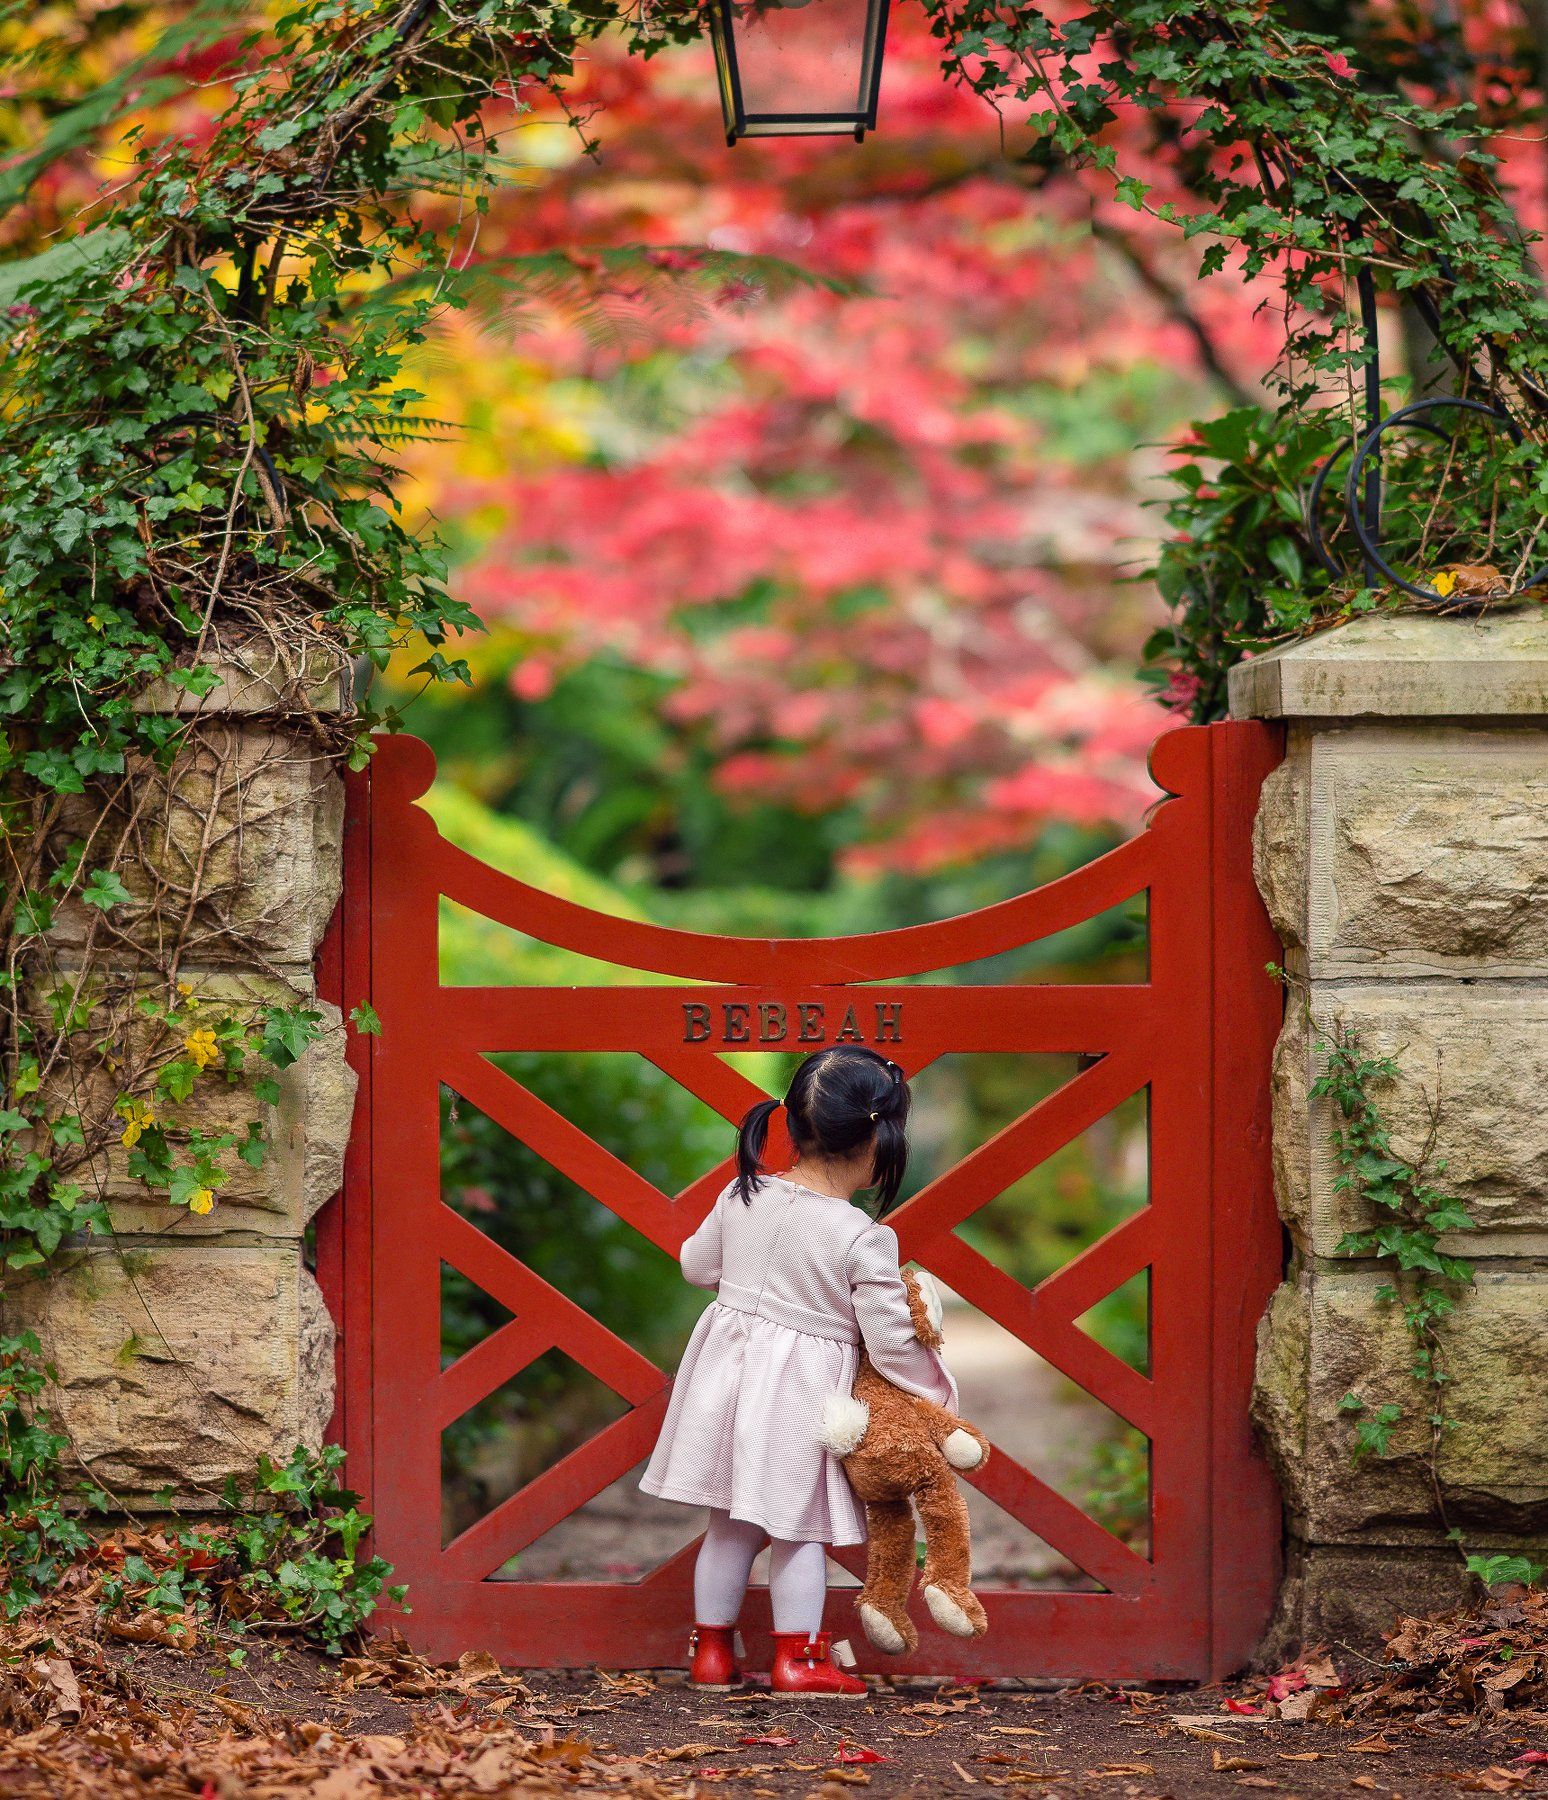 kidsfoto, girl, childhood, red, leaf, autumn, fall, gate, colour, natural light, Derek Zhang